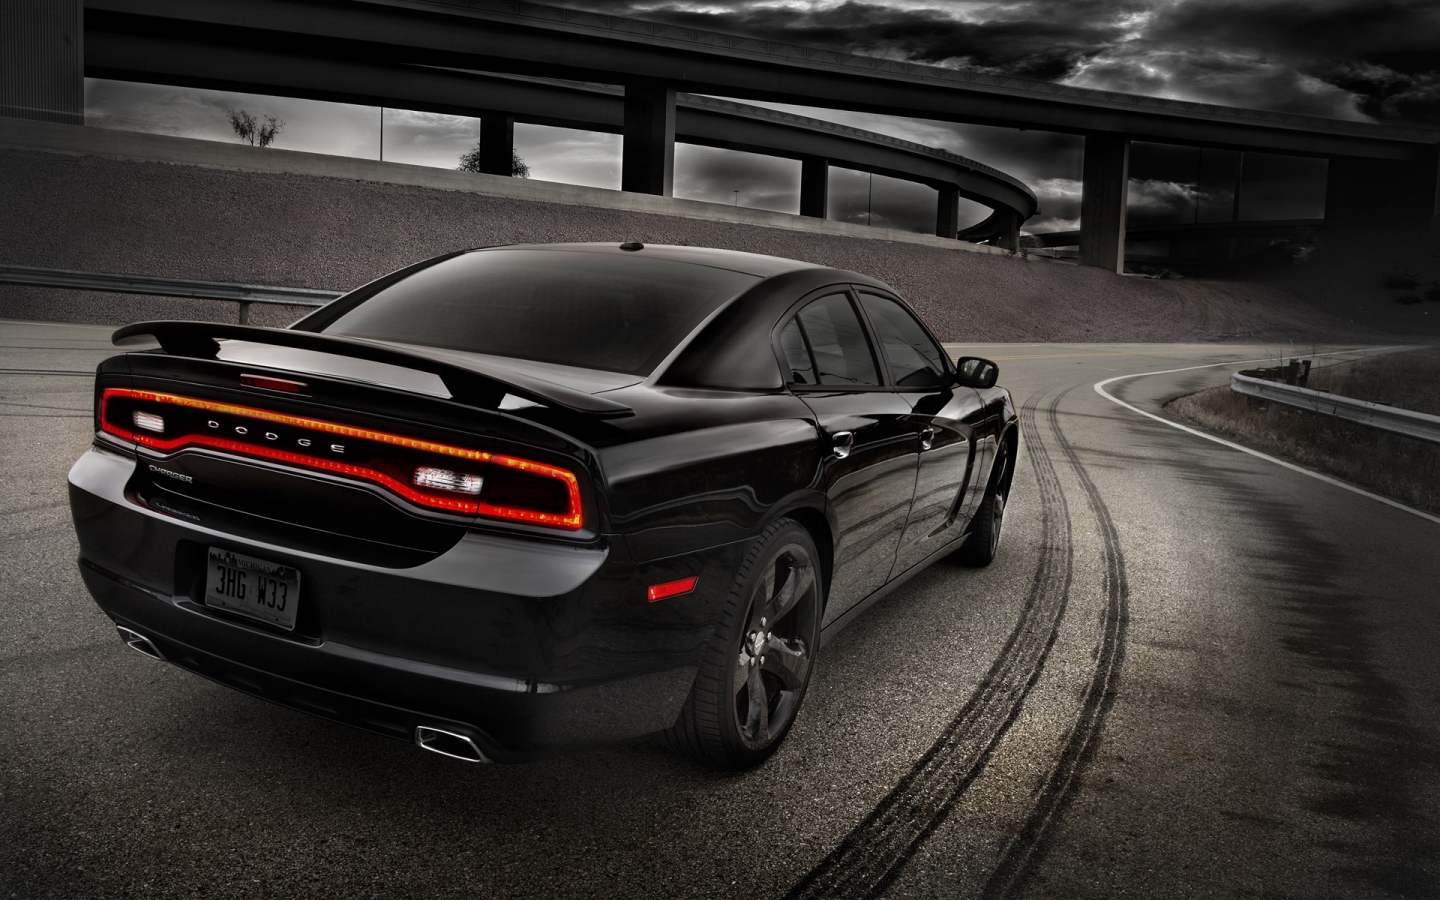 Dodge Blacktop Rear for 1440 x 900 widescreen resolution